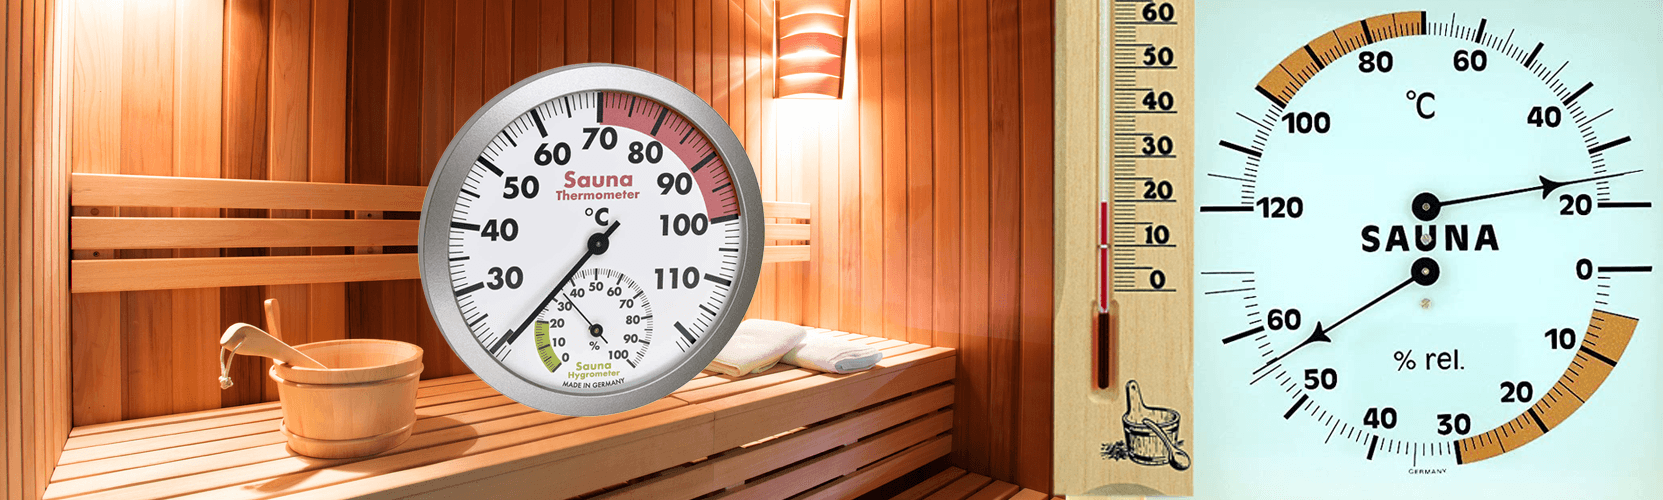 Sauna Thermometers - The Temperature Shop